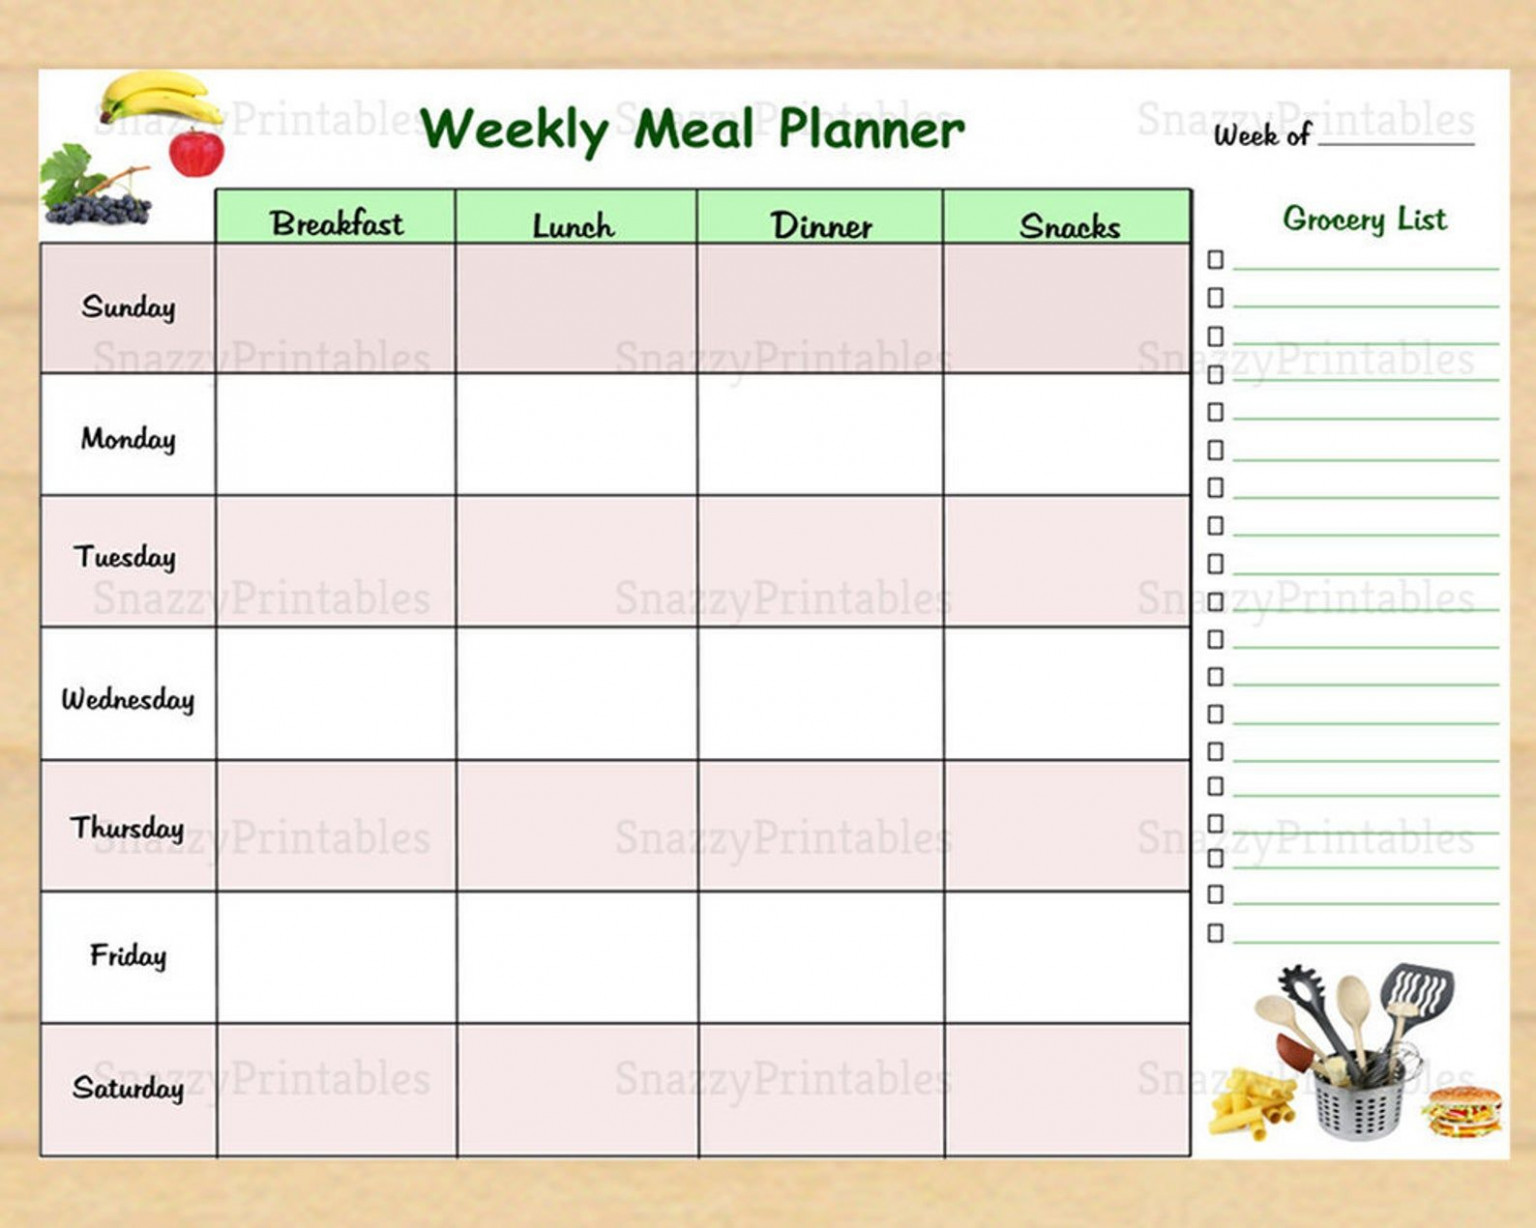 Meal Plan With Printable Grocery List | PrintableDietPlan.com